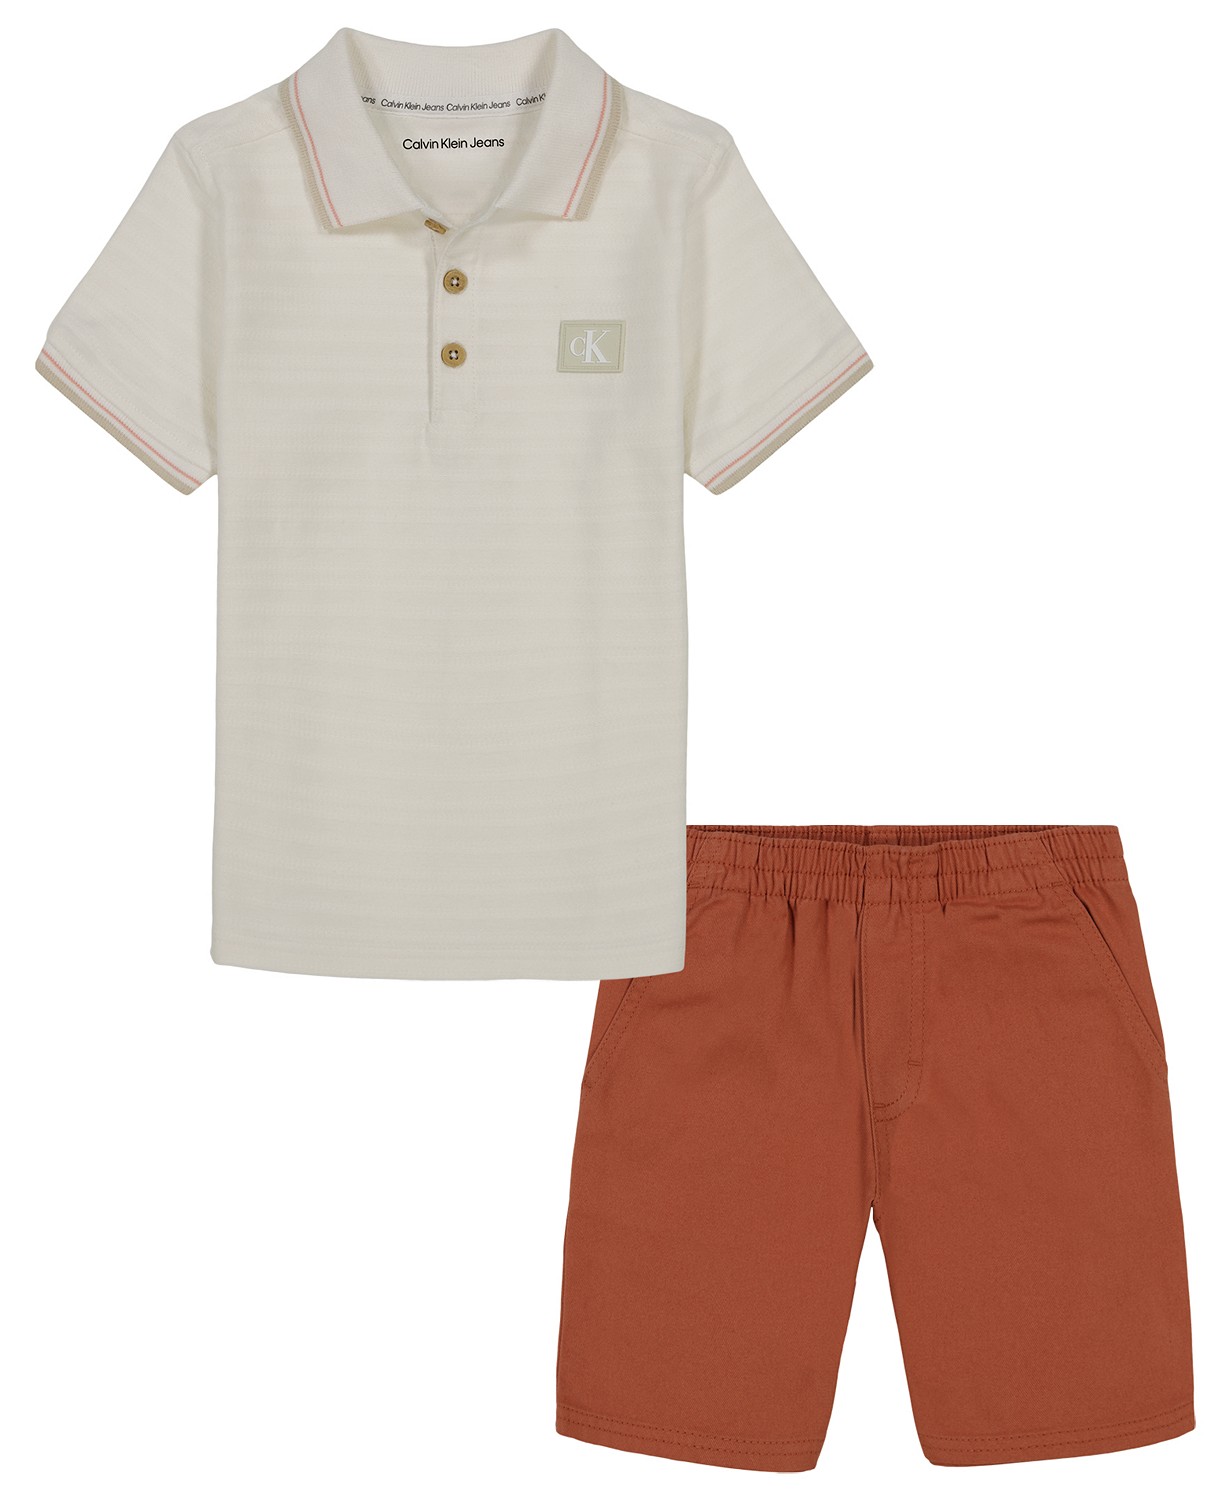 Toddler Boys Herringbone Short Sleeve Polo Shirt and Twill Shorts 2 Piece Set